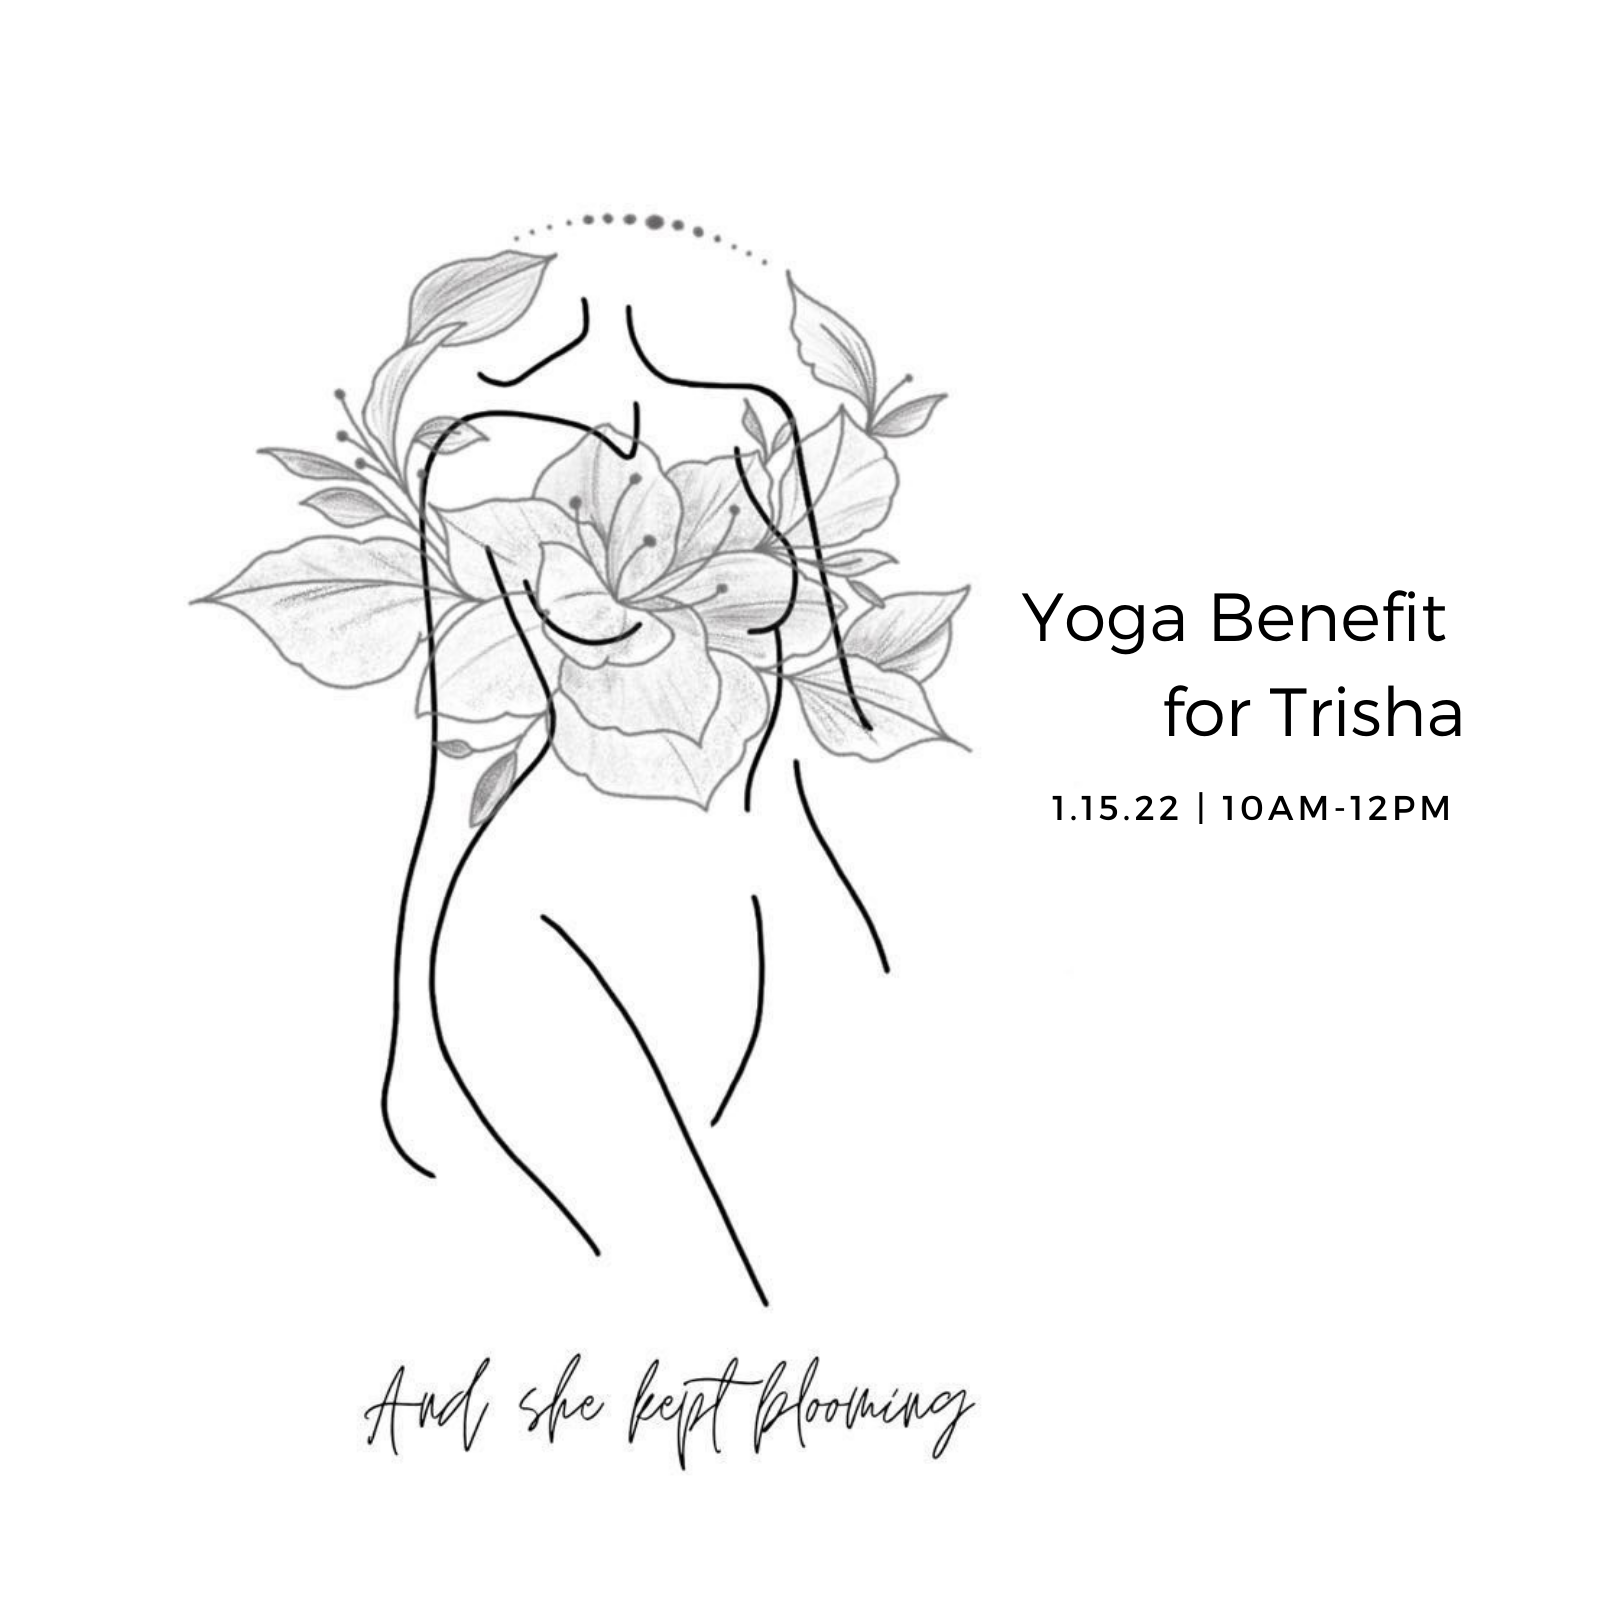 Yoga Benefit for Trisha